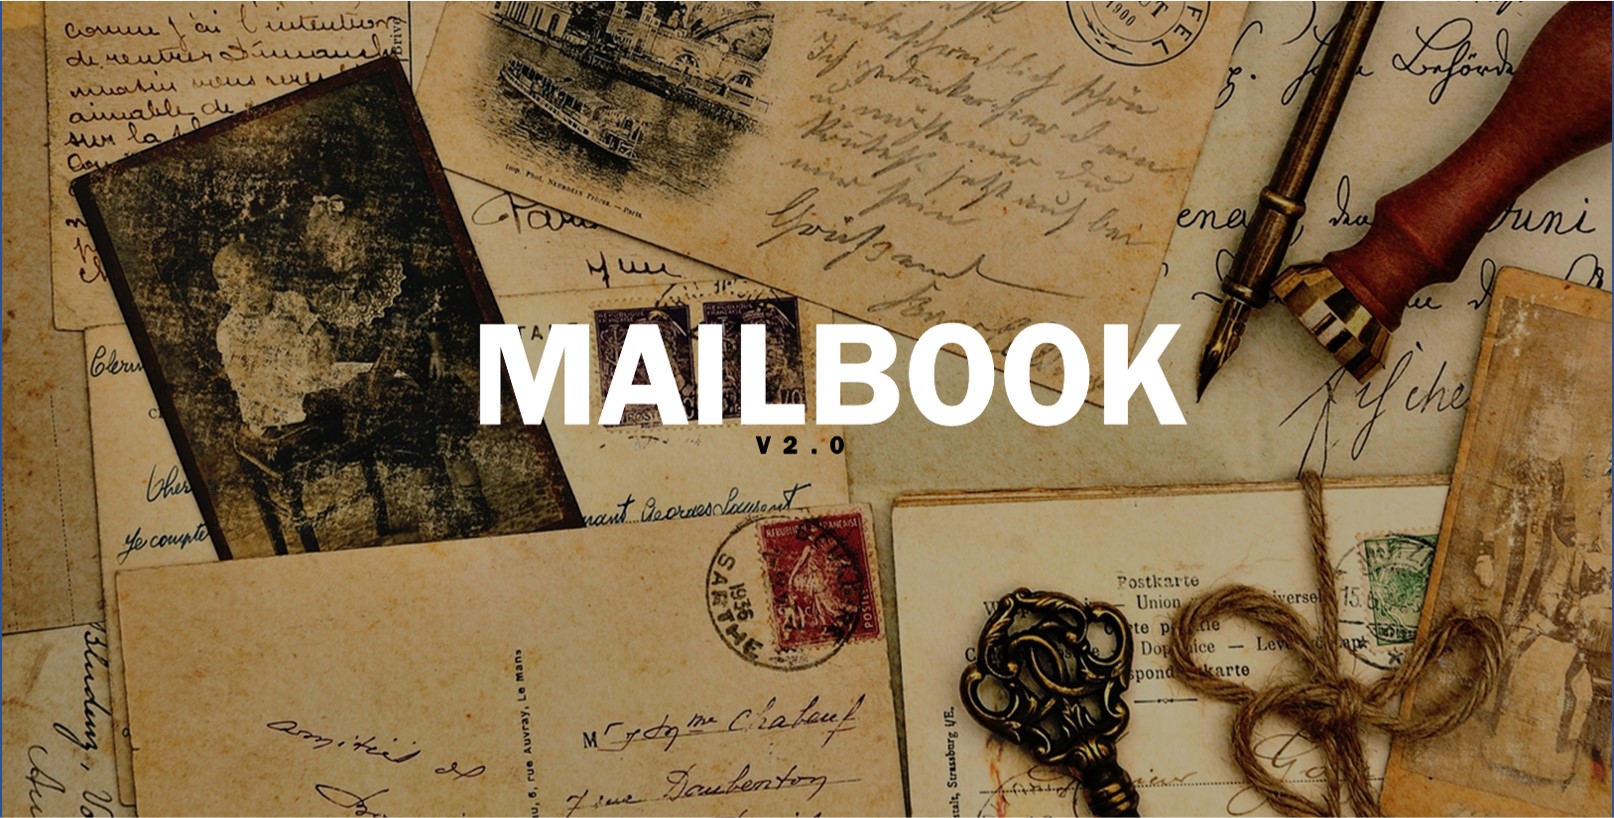 Mail Book v2.0